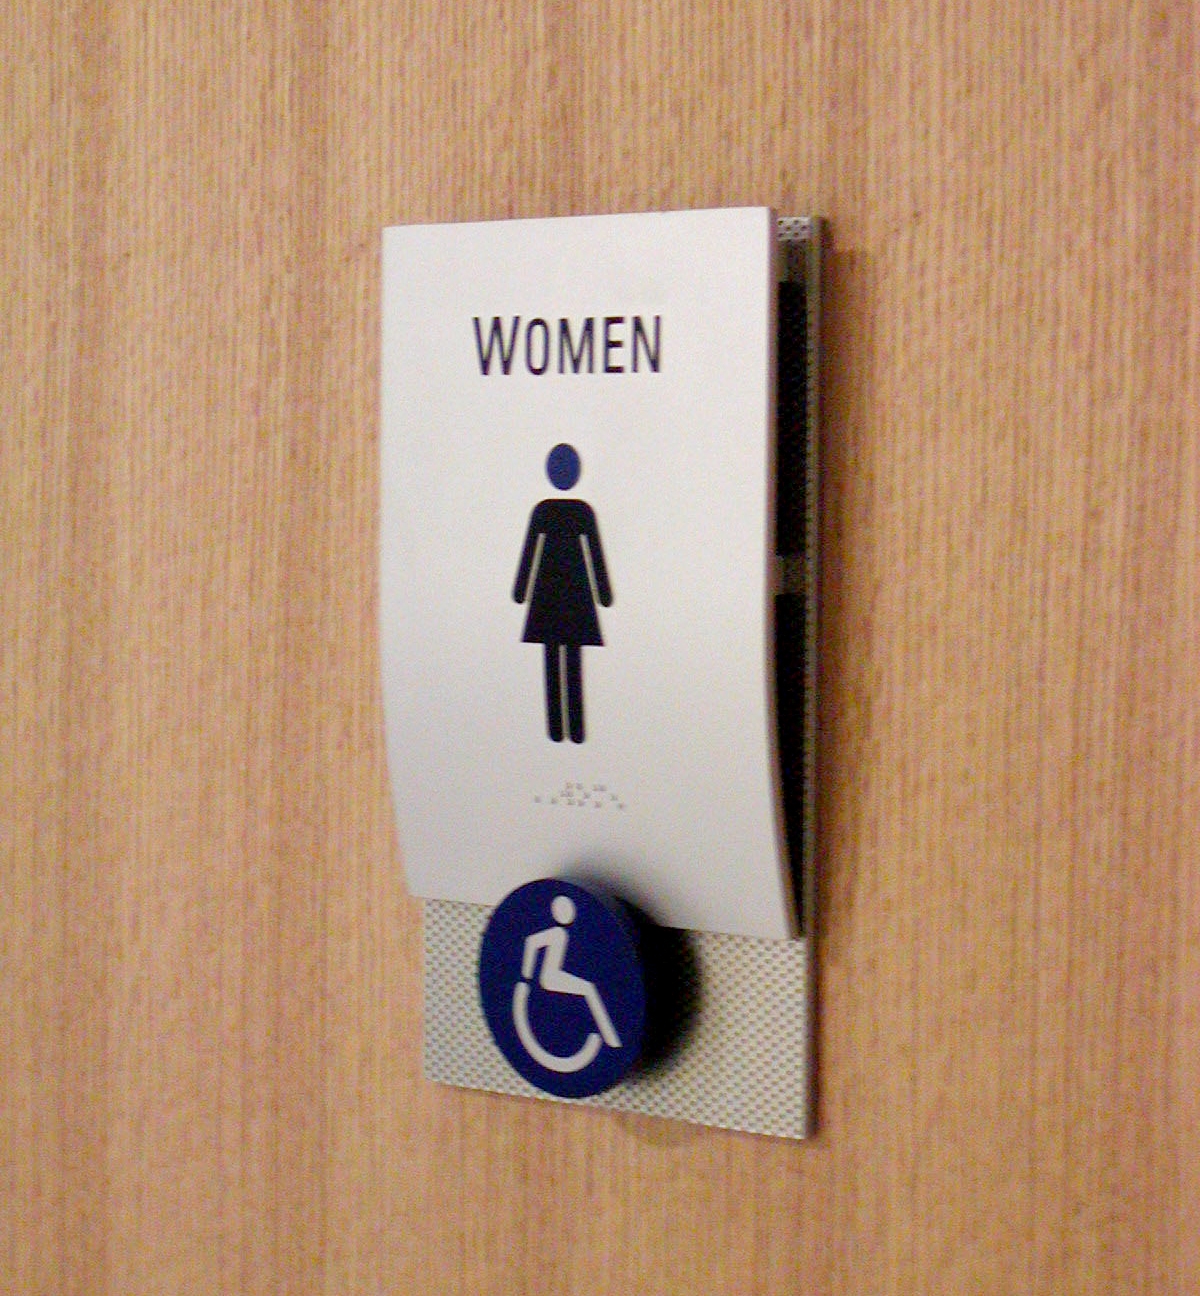 women restroom.jpg